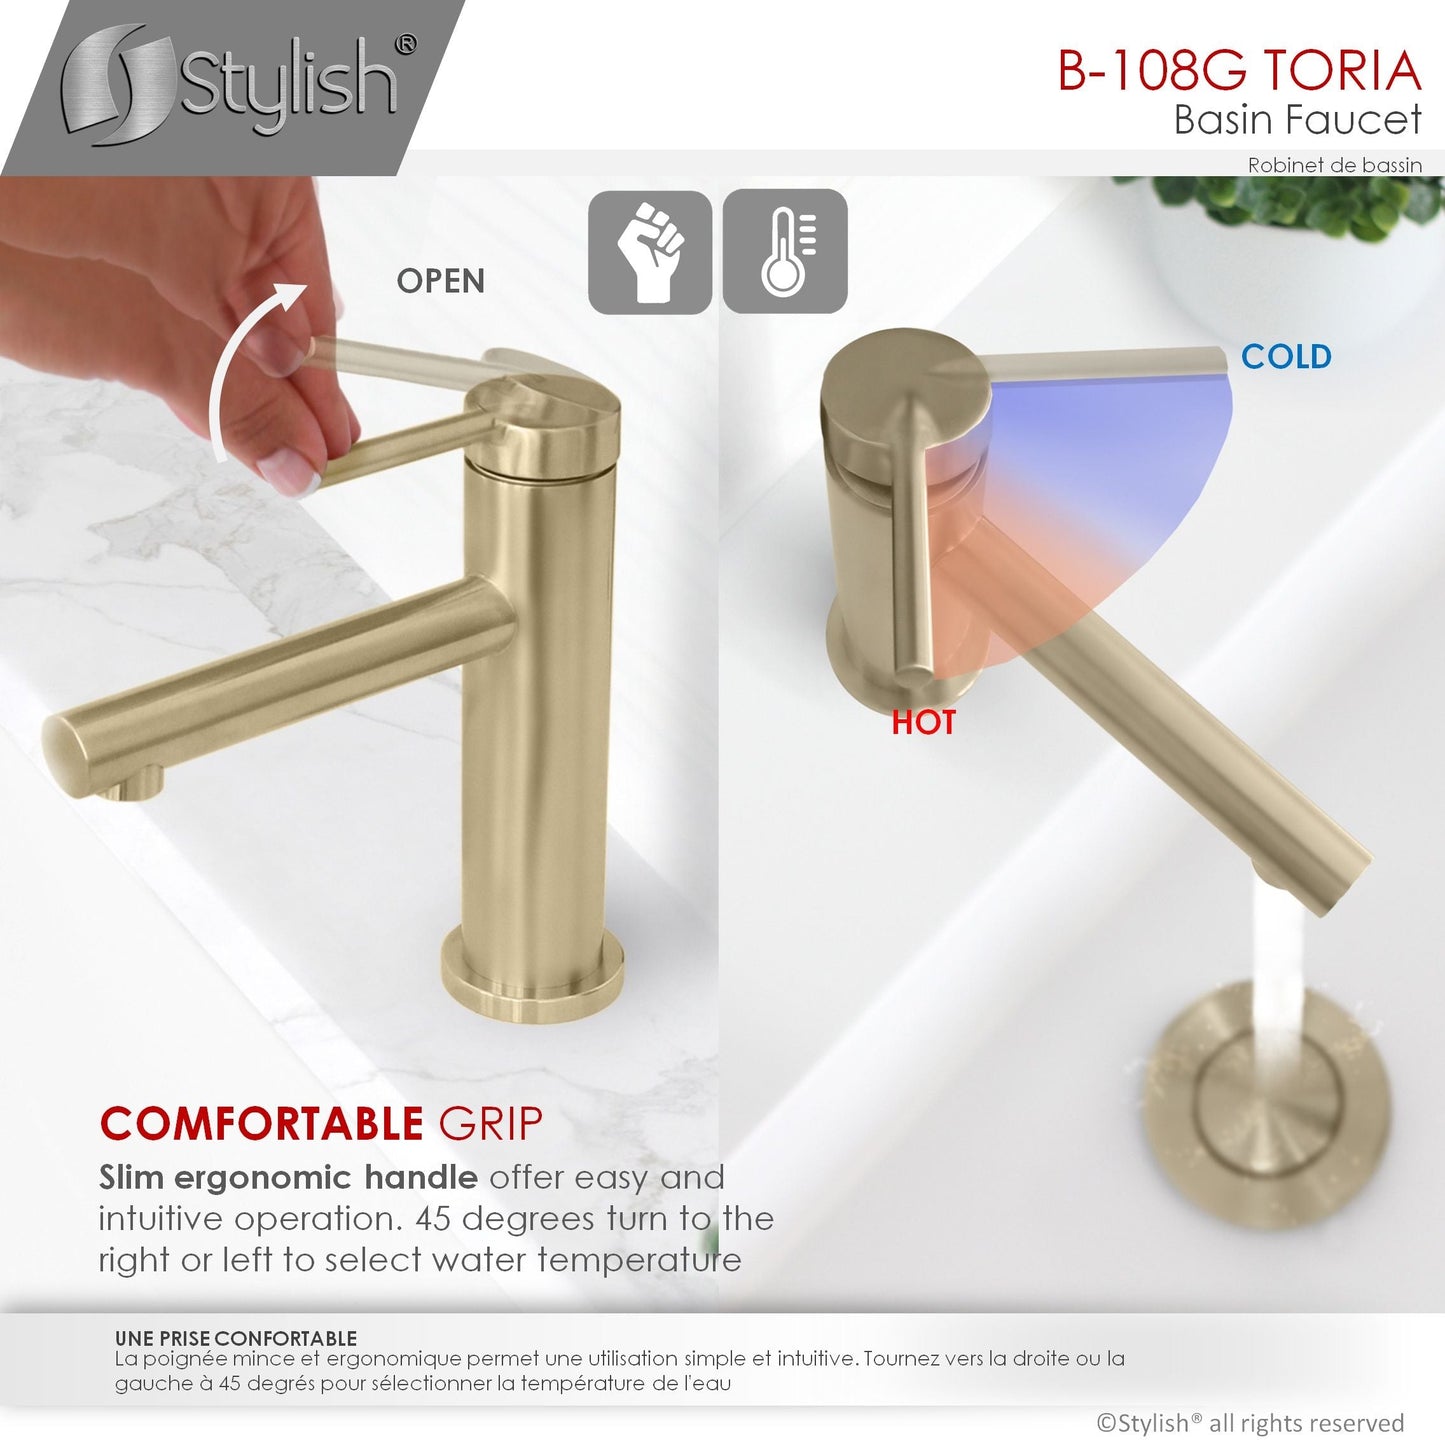 Stylish Toria 6" Single Handle Basin Bathroom Faucet in Brushed Gold Finish B-108G